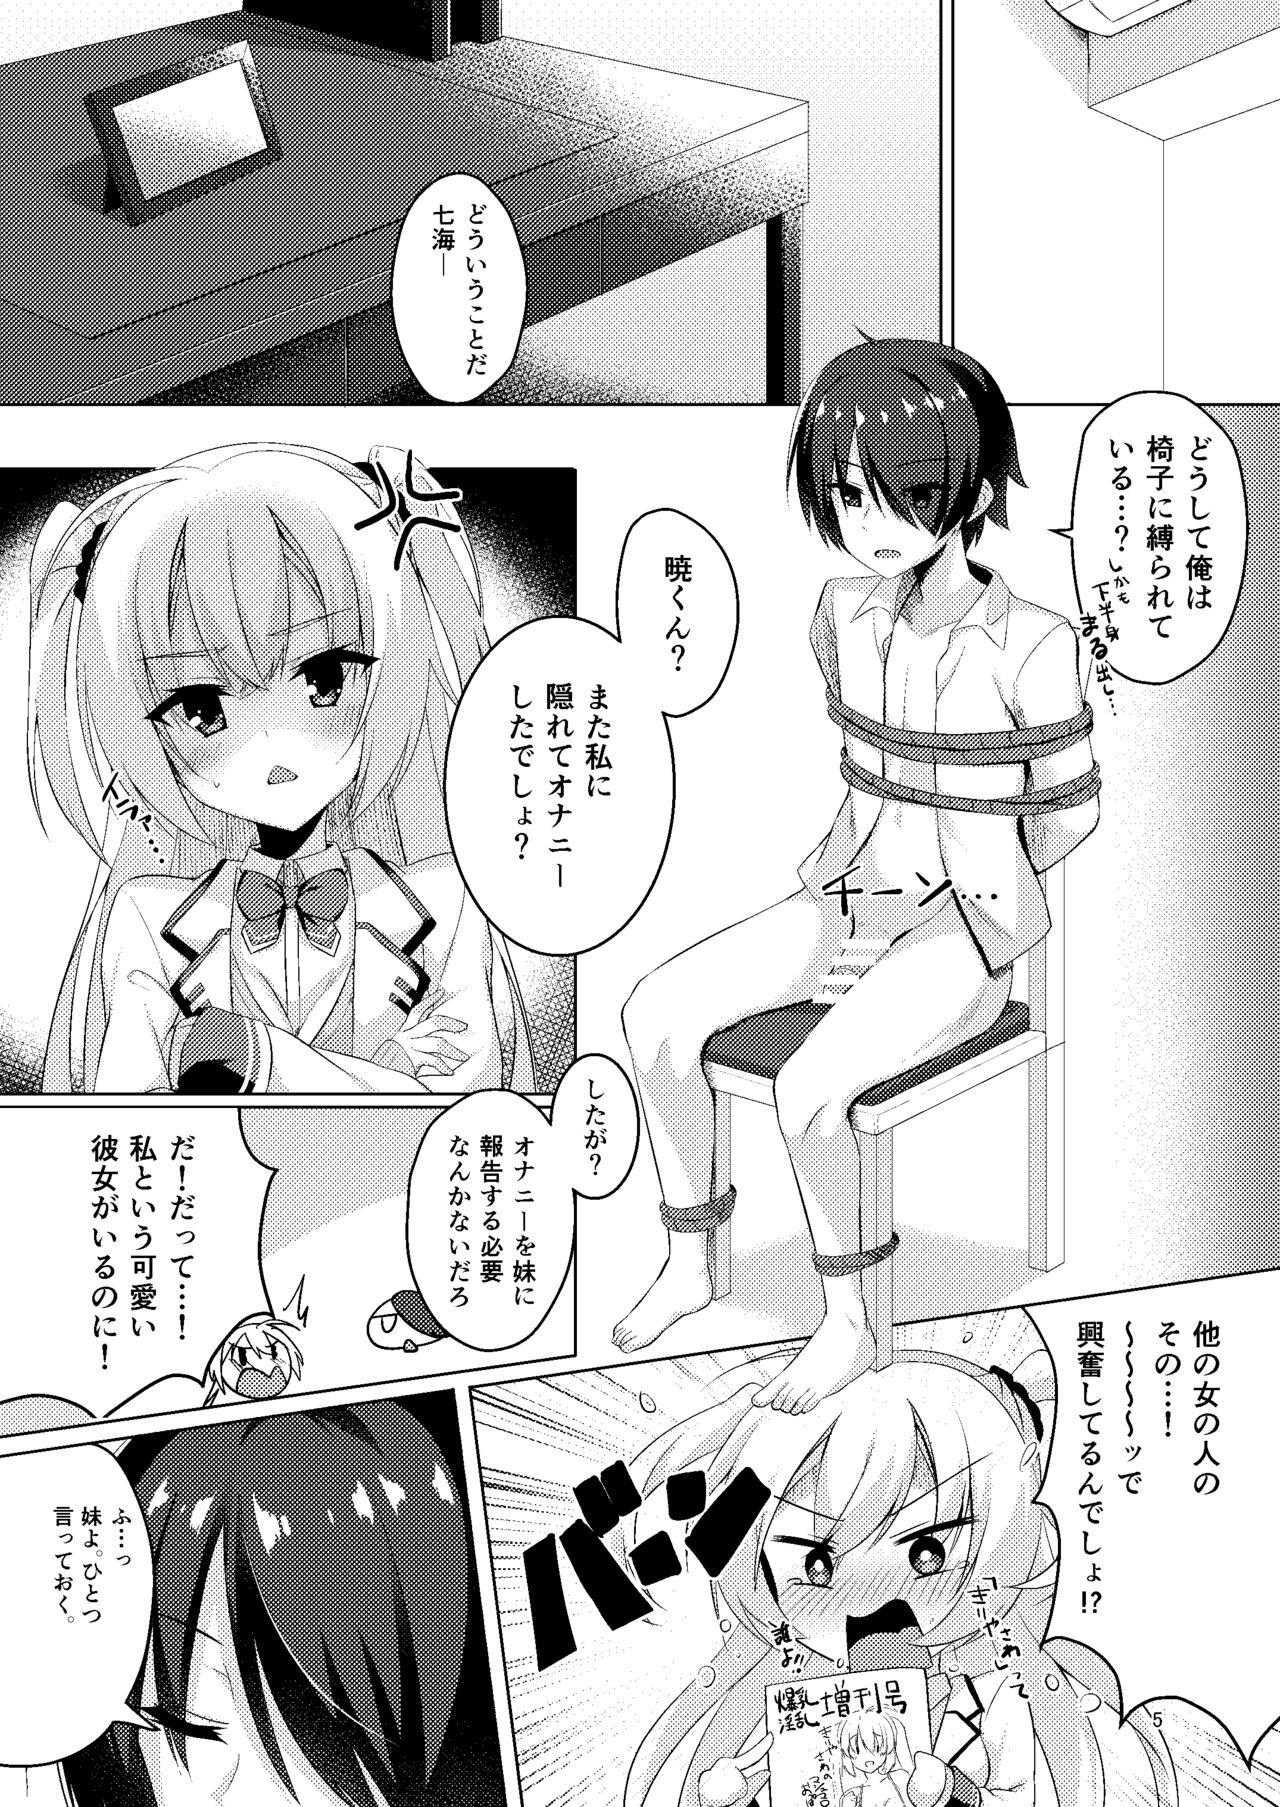 Riding Onii-chan ga Imouto ni Kateru Wake Nai desho - Riddle joker Camsex - Page 5